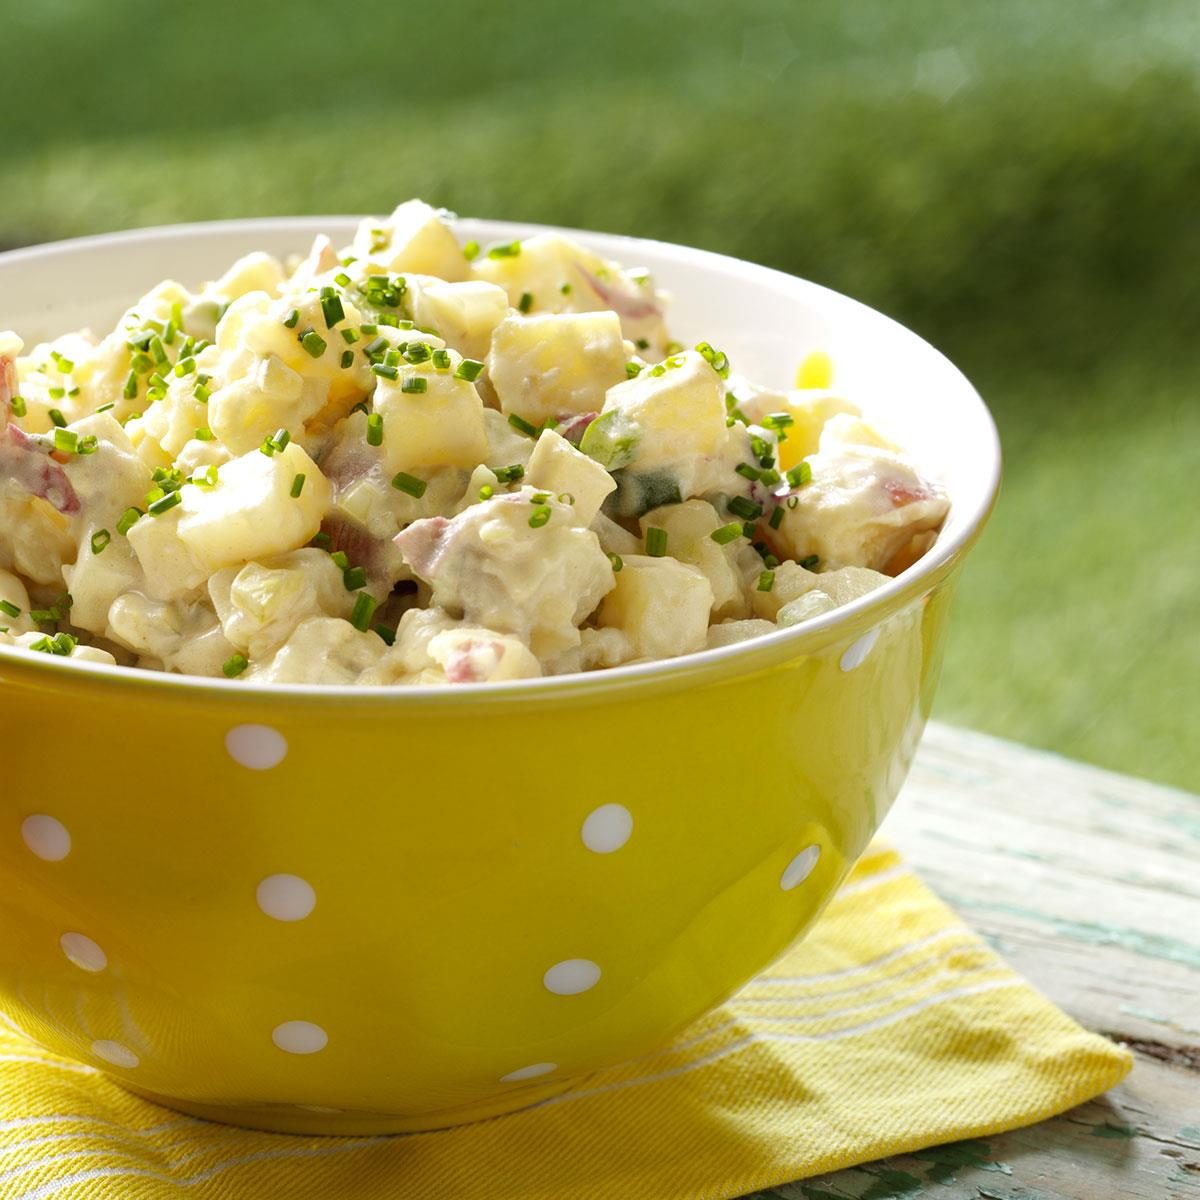 Honey-Dijon Potato Salad Recipe: How to Make It